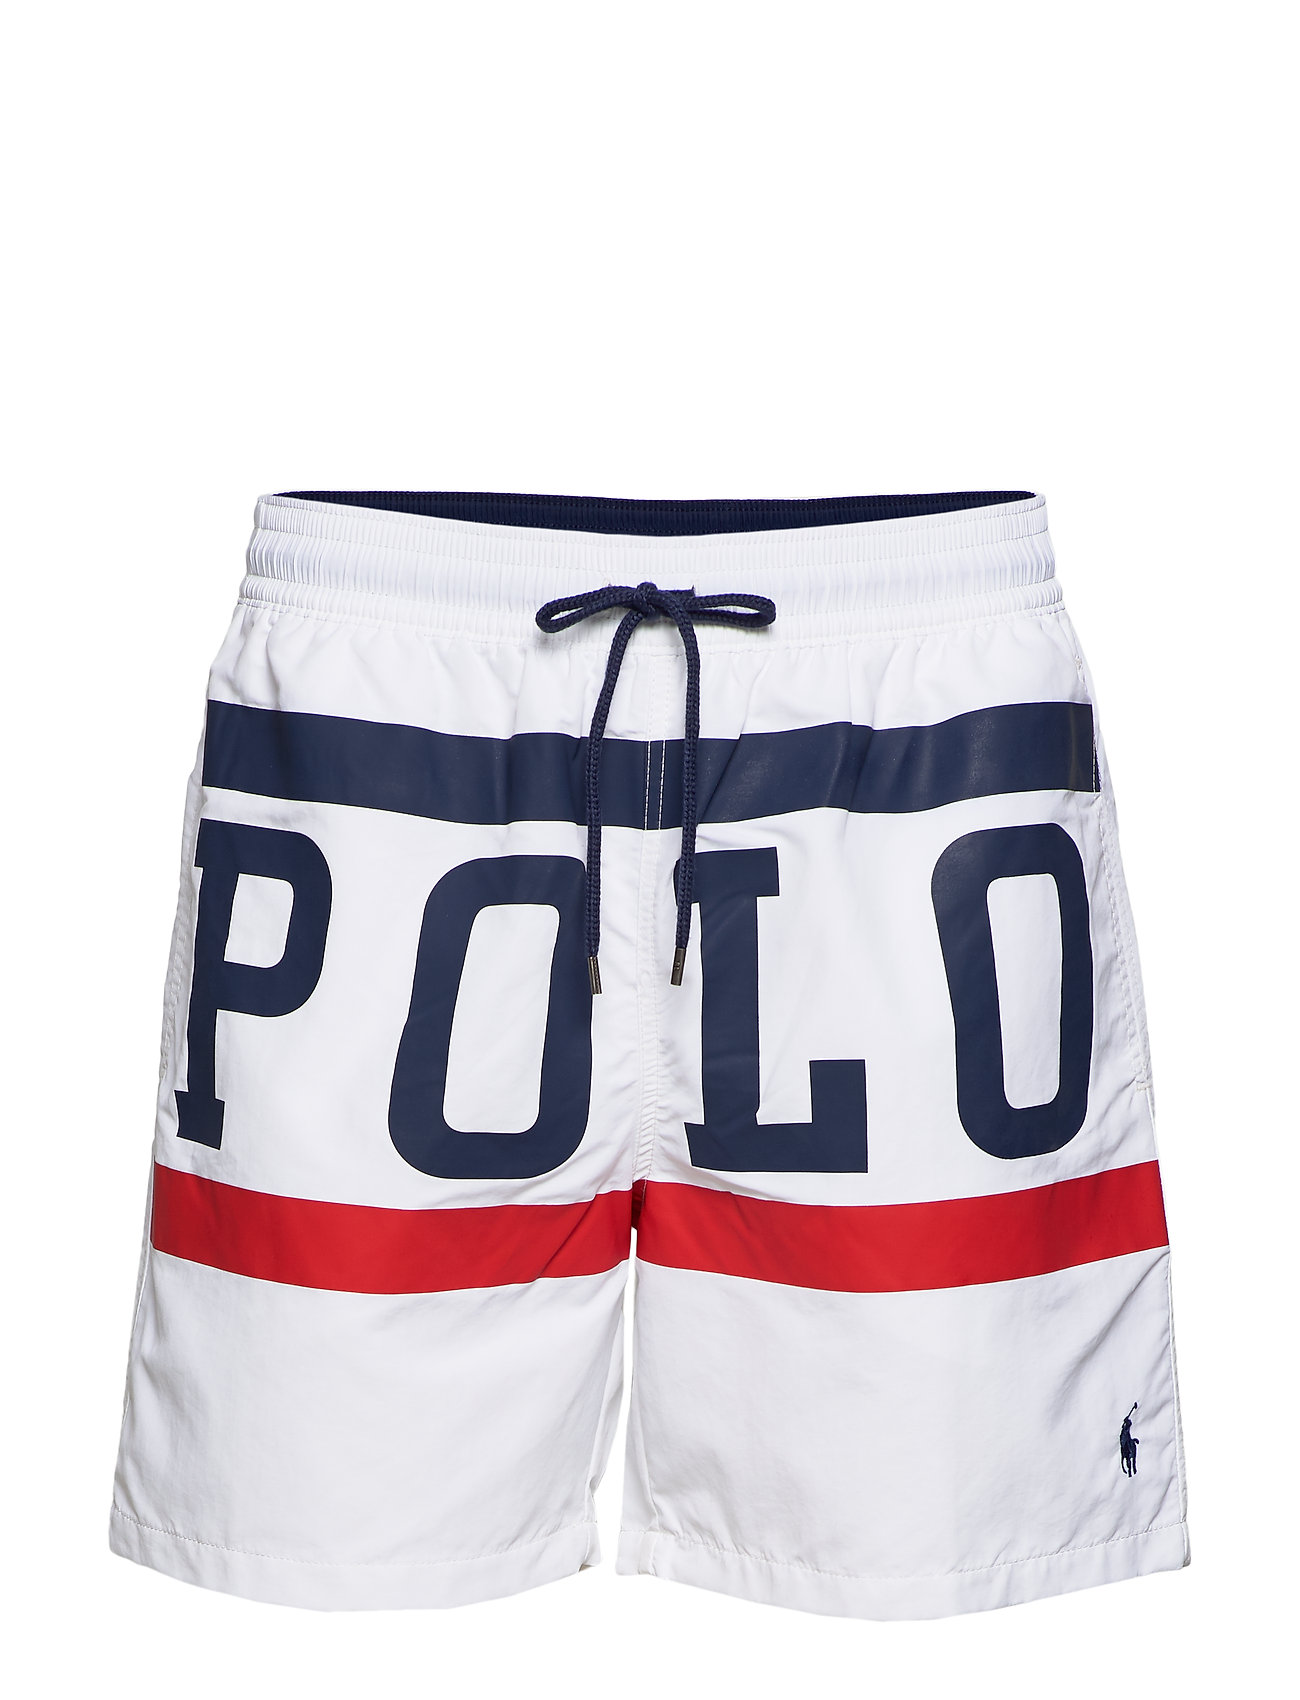 polo outlet swim trunks